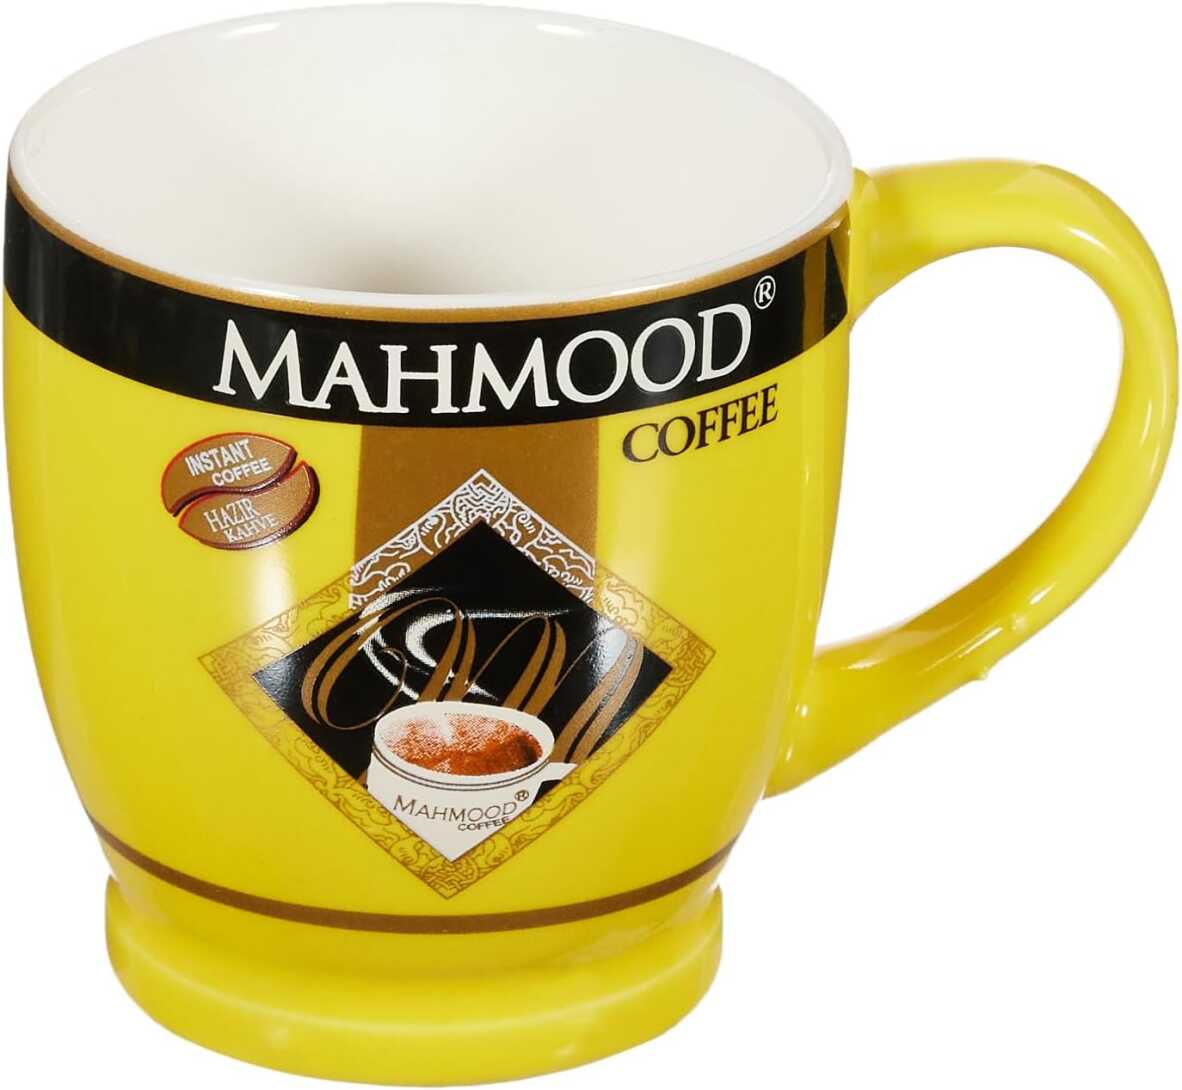 Mahmood Coffee Sarı Porselen Kupa - 1